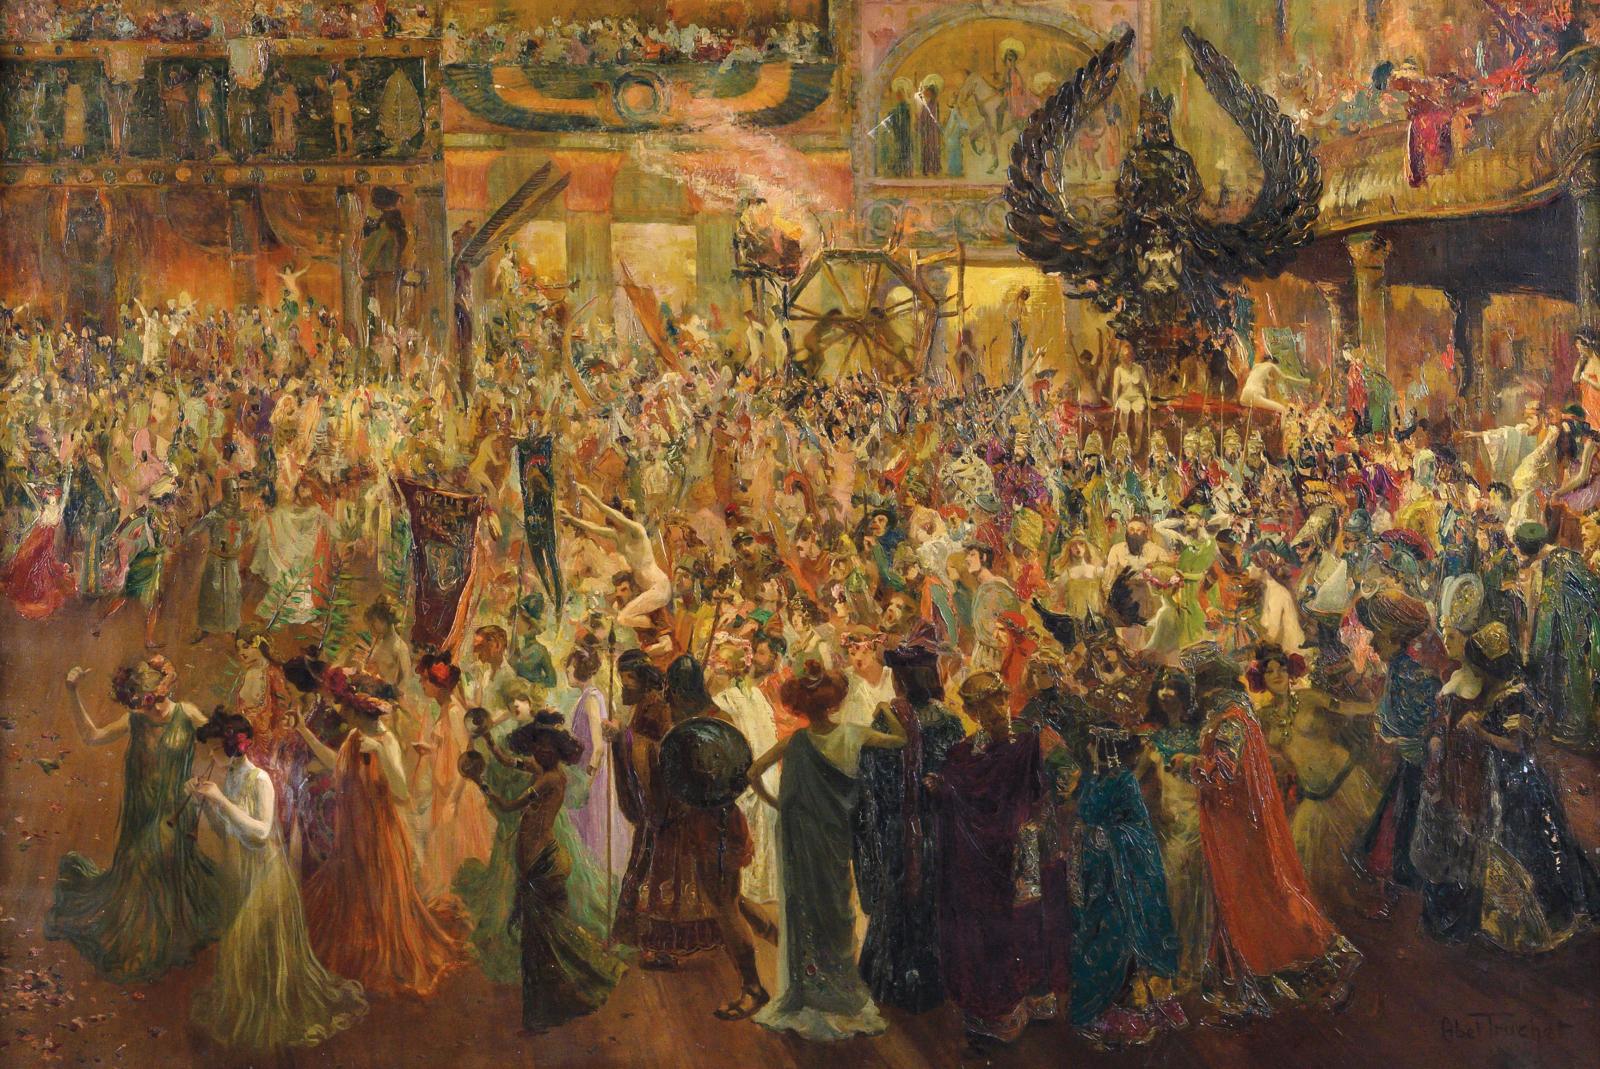 Du bal d’Abel-Truchet à l’offrande de Chagall